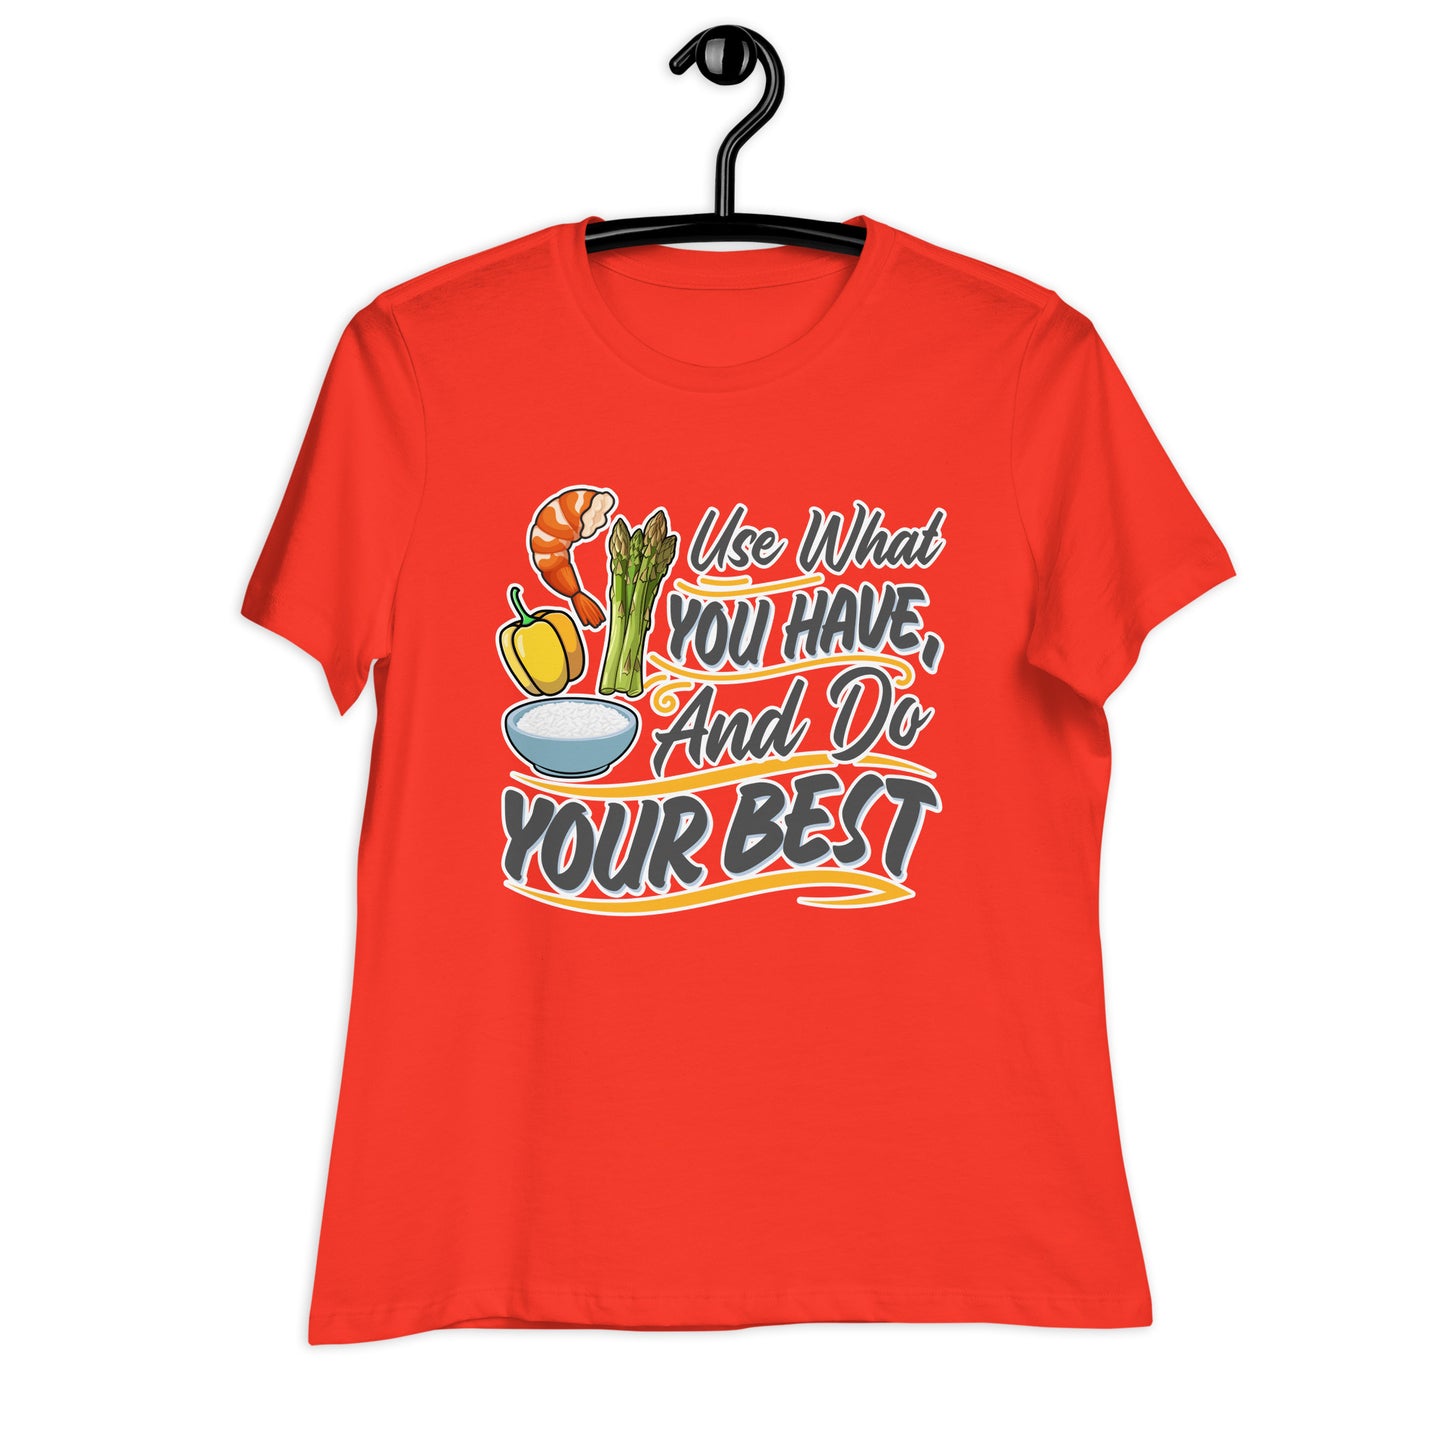 Do Your Best Women's Relaxed T-Shirt